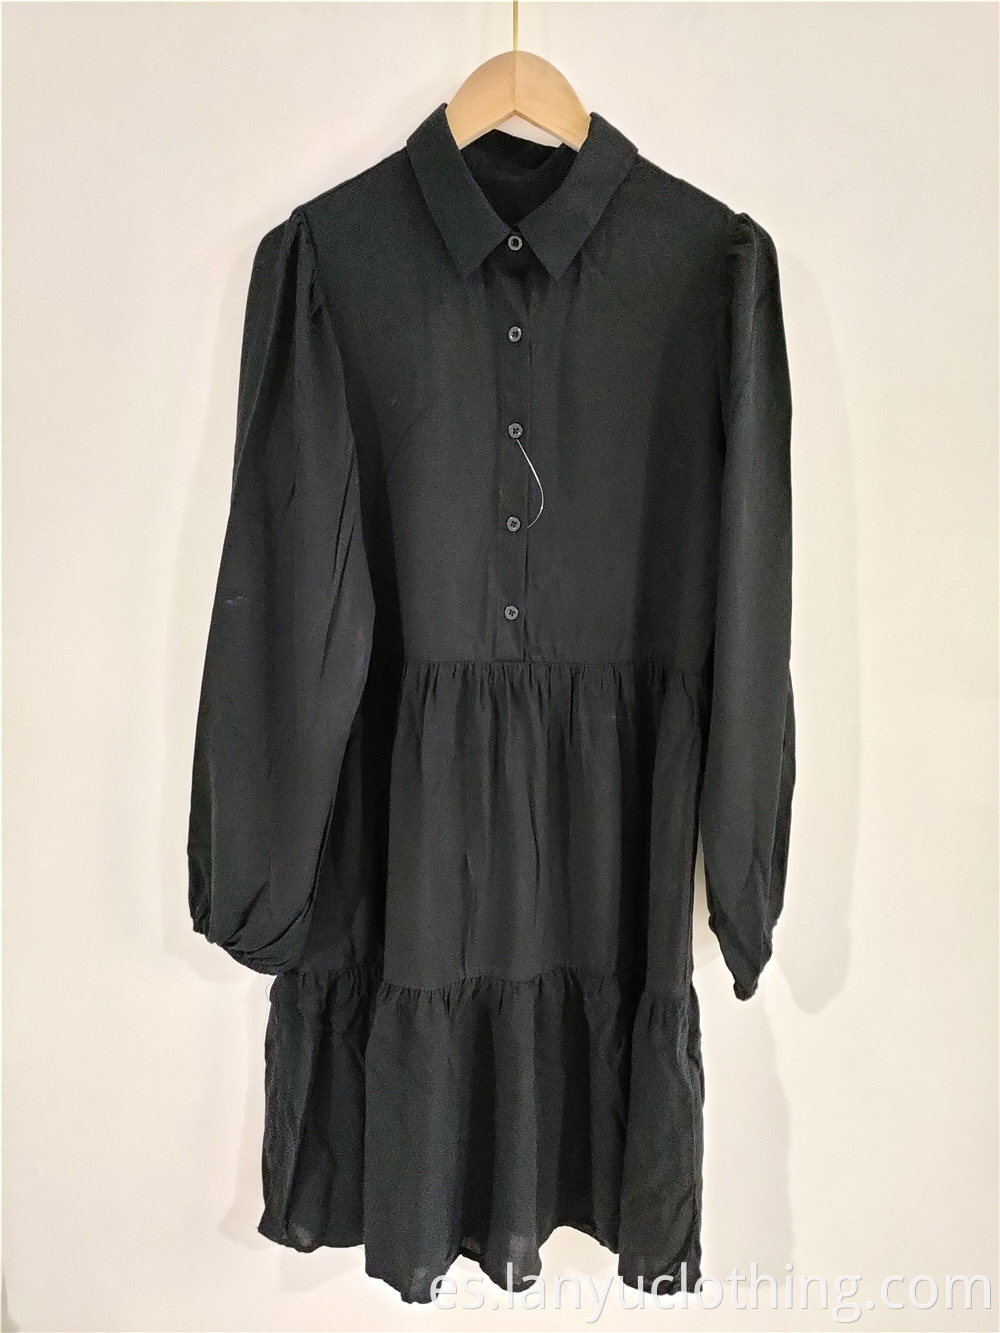 Black Long Sleeve Stand Collar Dress